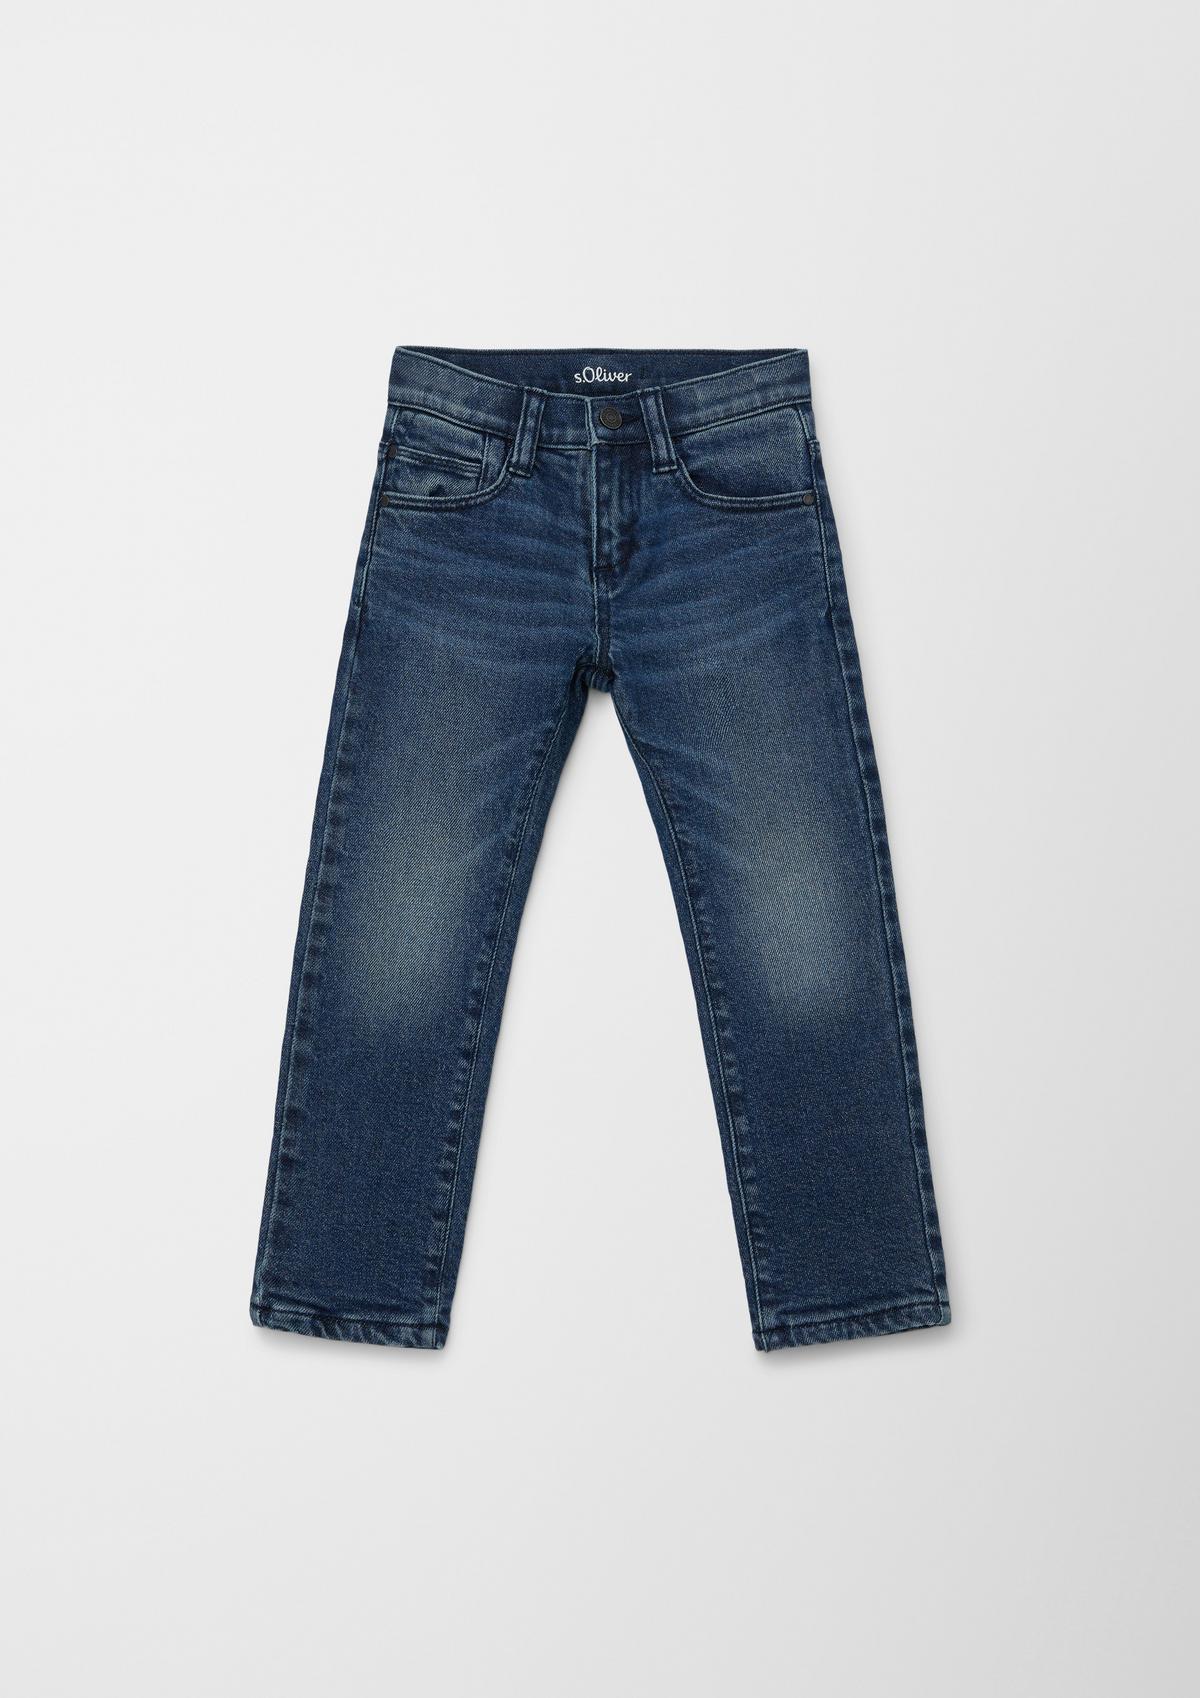 Jeans Pelle / regular fit / mid rise / straight leg